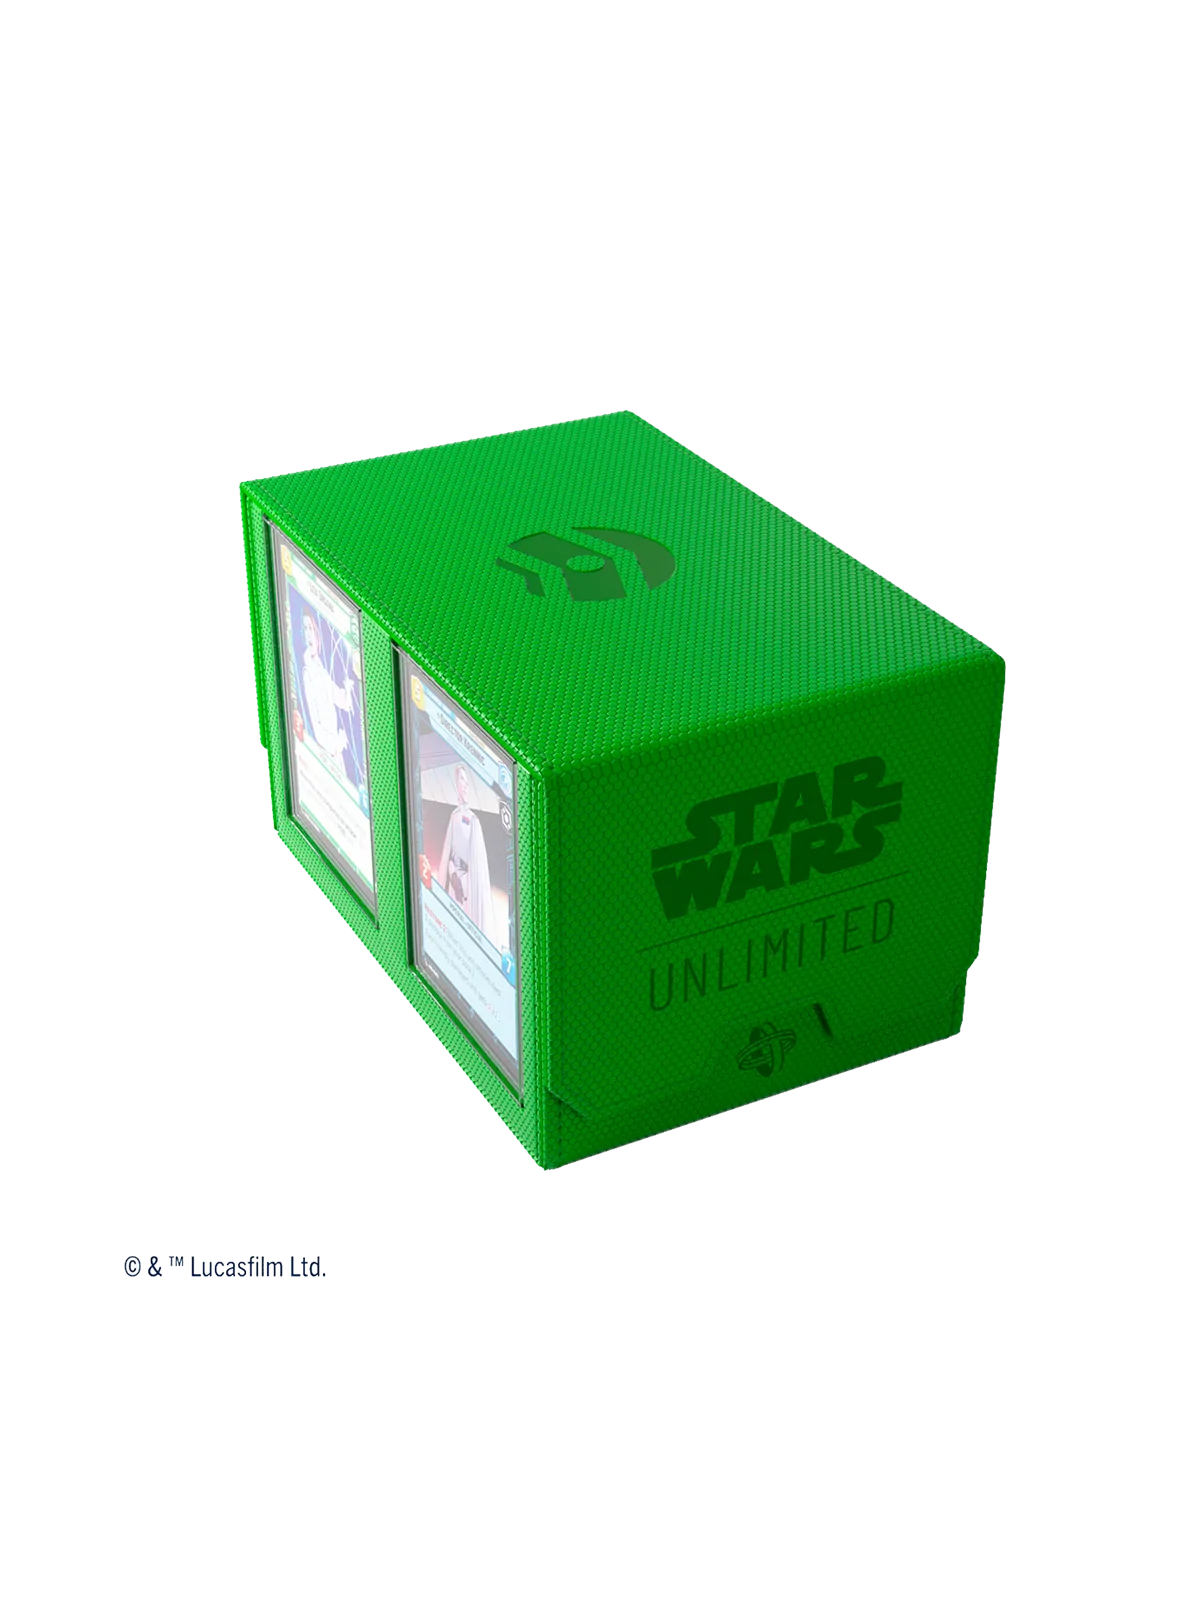 Comprar Star Wars: Unlimited Double Deck Pod Green barato al mejor pre